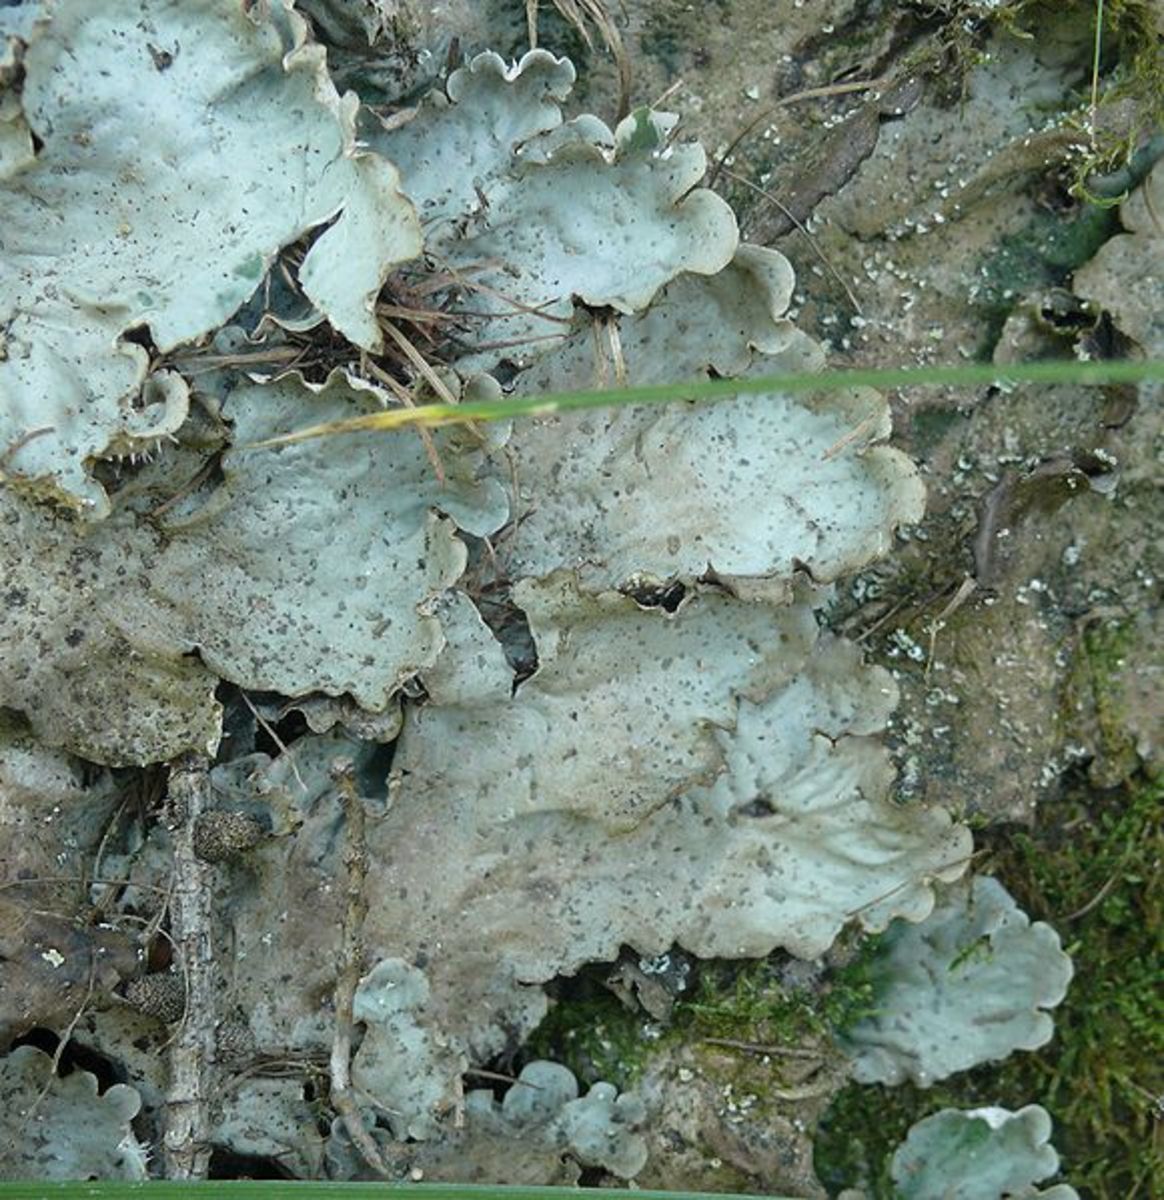 Peltigera leucophlebia, a genus of about 91 species of lichenized fungi